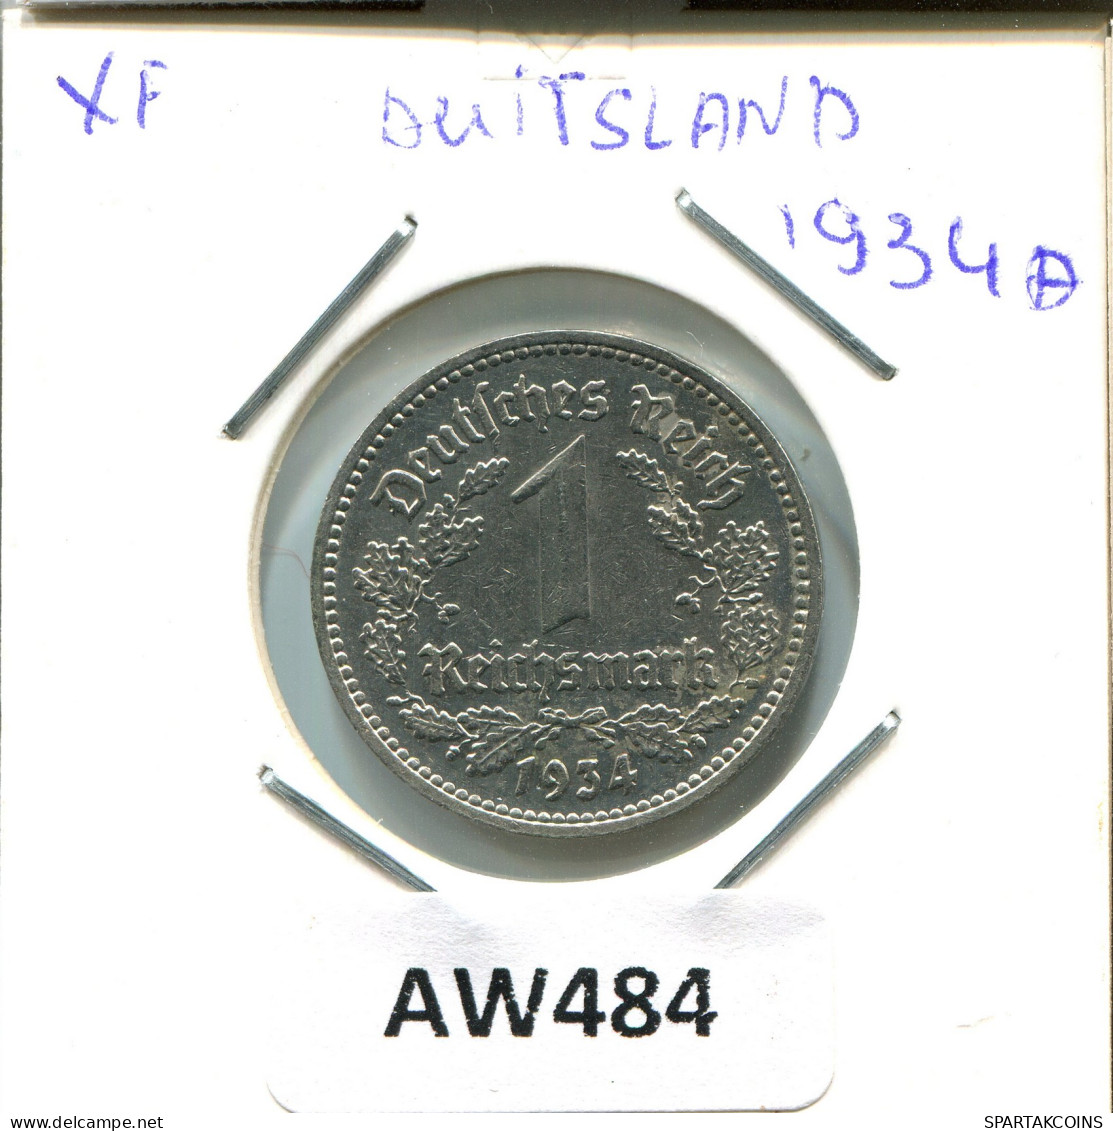 1 REISCHMARK 1934 A GERMANY Coin #AW484.U - 1 Reichsmark